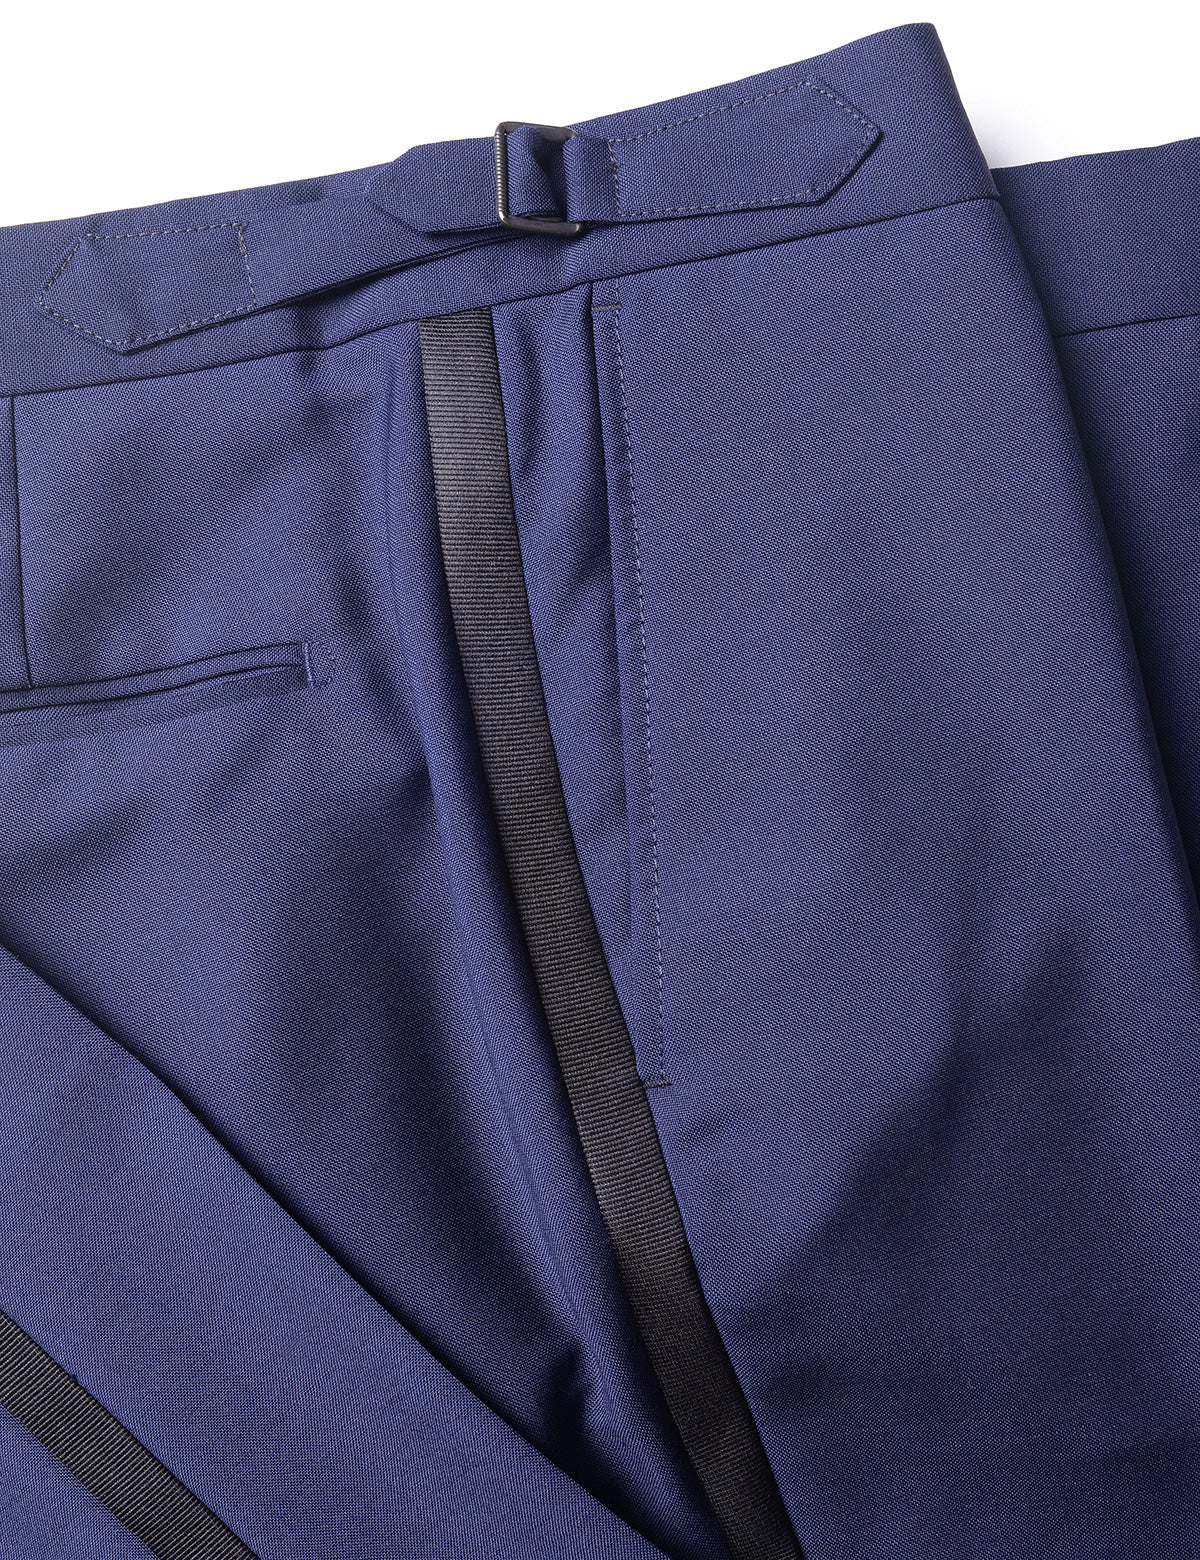 Detail shot of Brooklyn Tailors BKT50 Tuxedo Trouser in Wool / Mohair - Ink Blue with Grosgrain Stripe showing grosgrain stripe and side adjuster